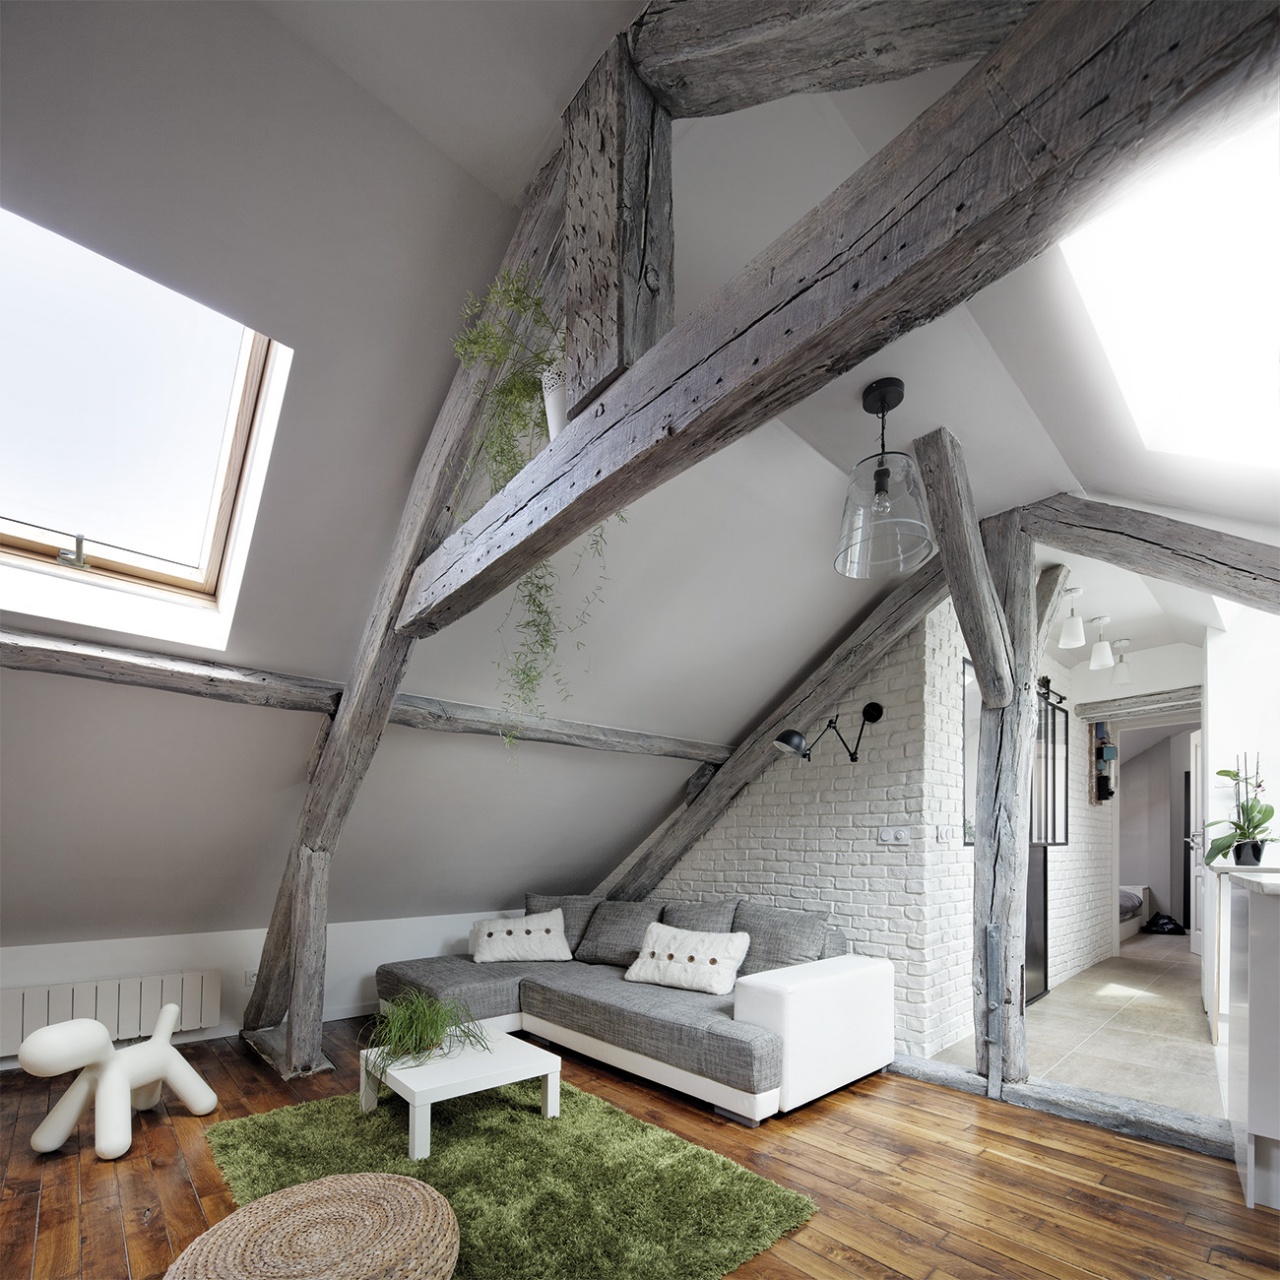 Interiors in the attic - Living room